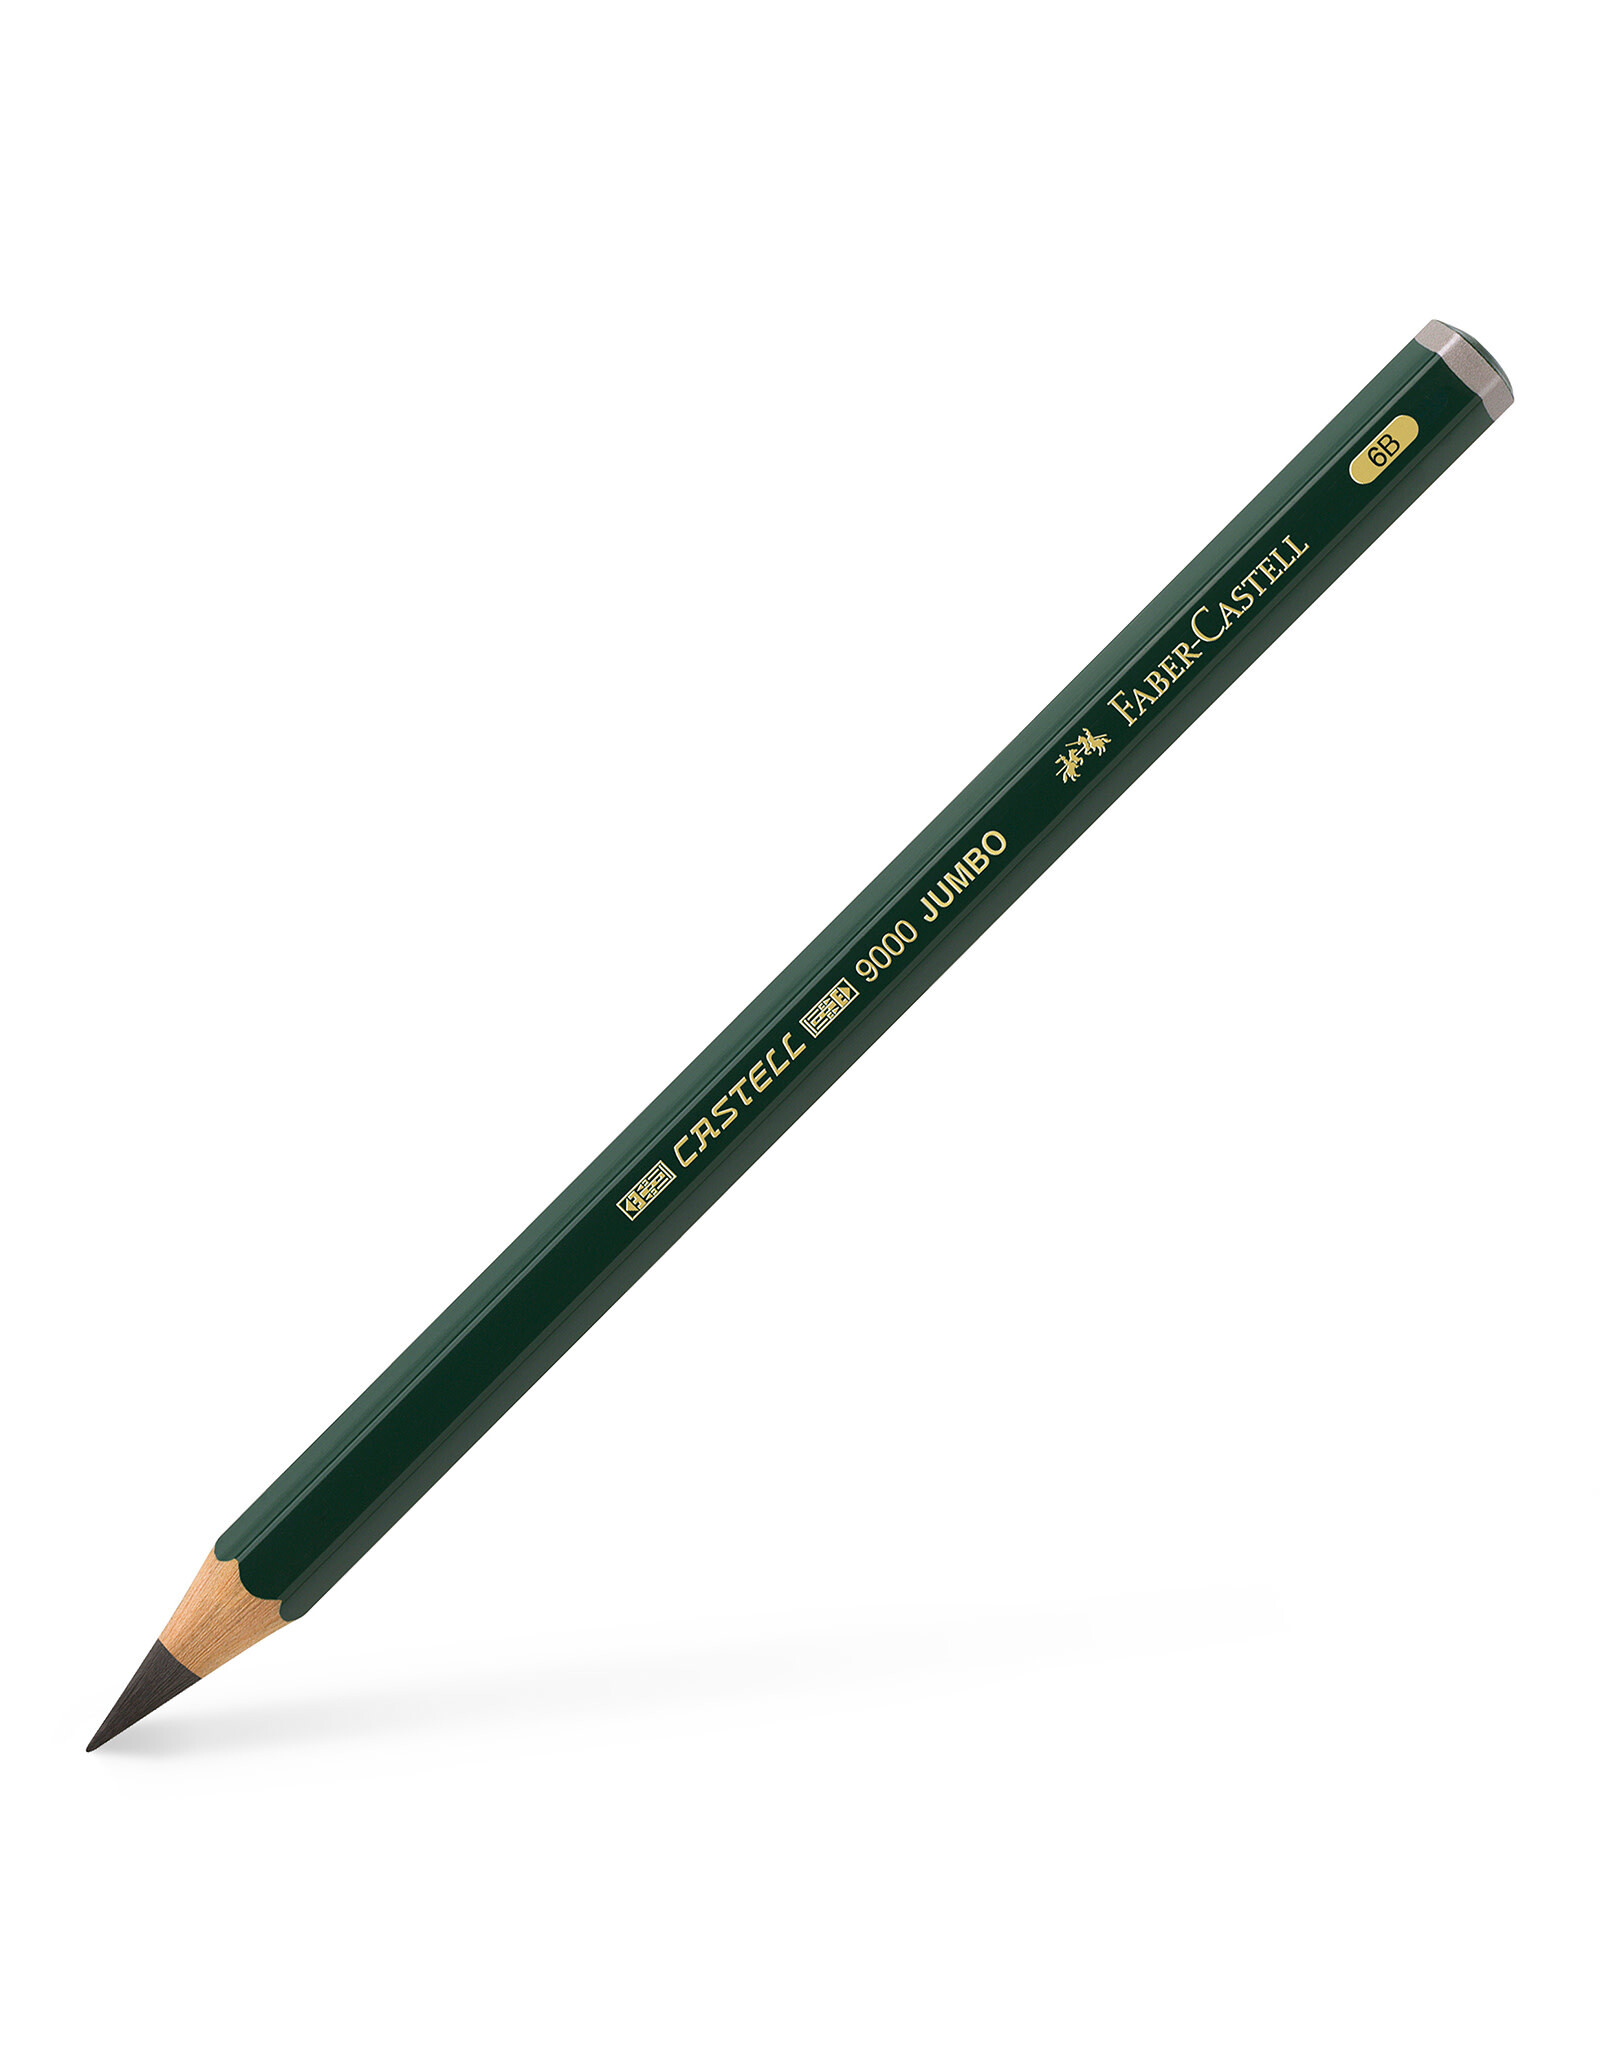 FABER-CASTELL Castell® 9000 Jumbo Graphite Pencil, 6B